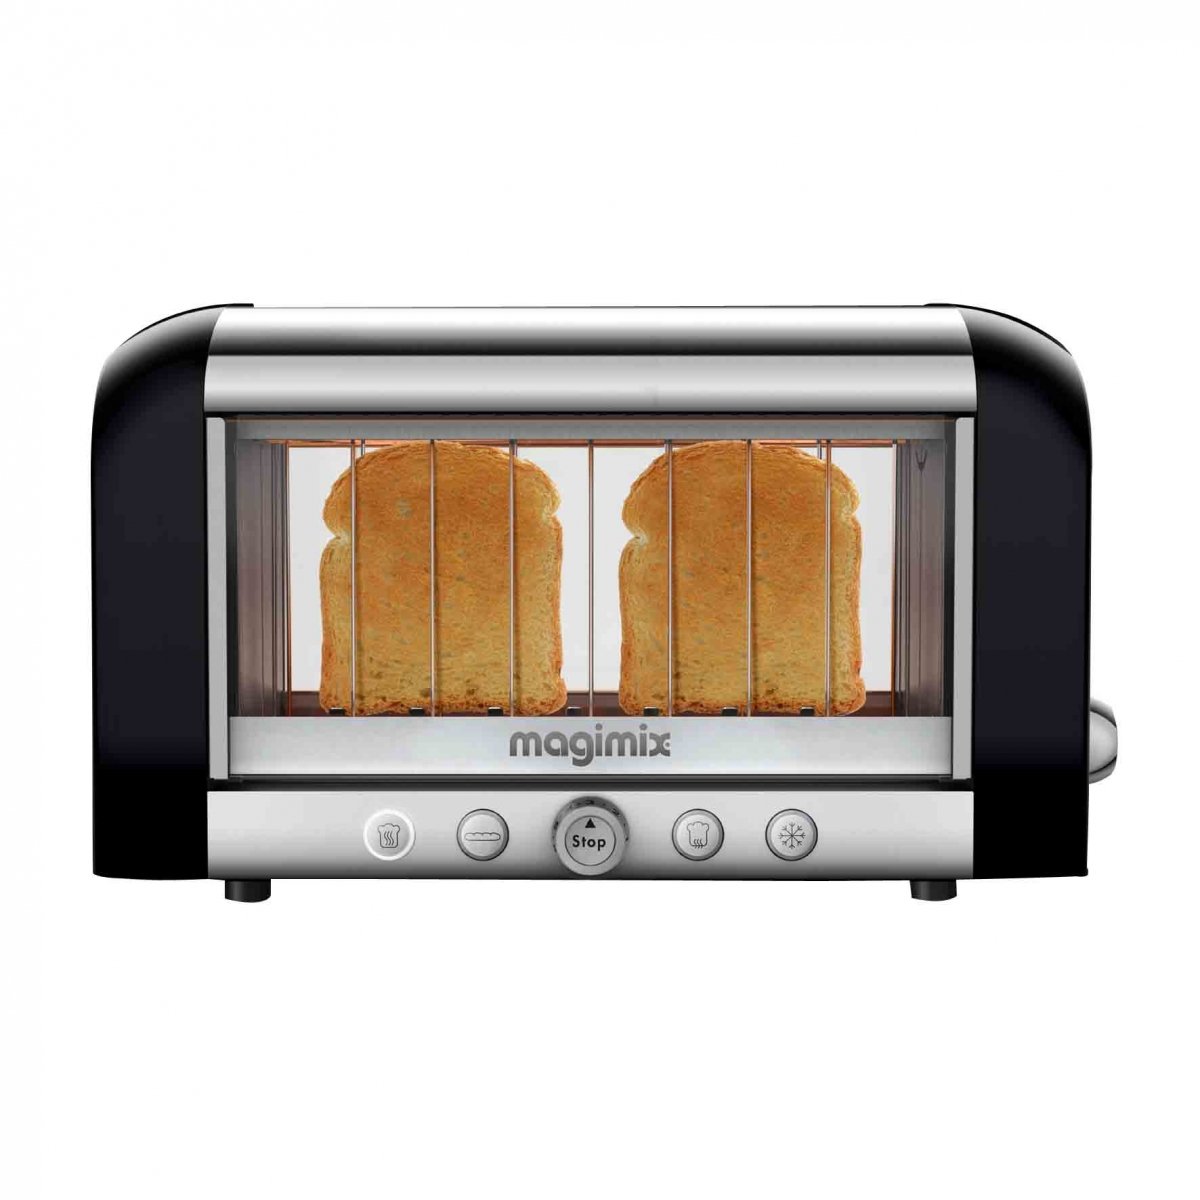 Toaster Vision, MAGIMIX schwarz